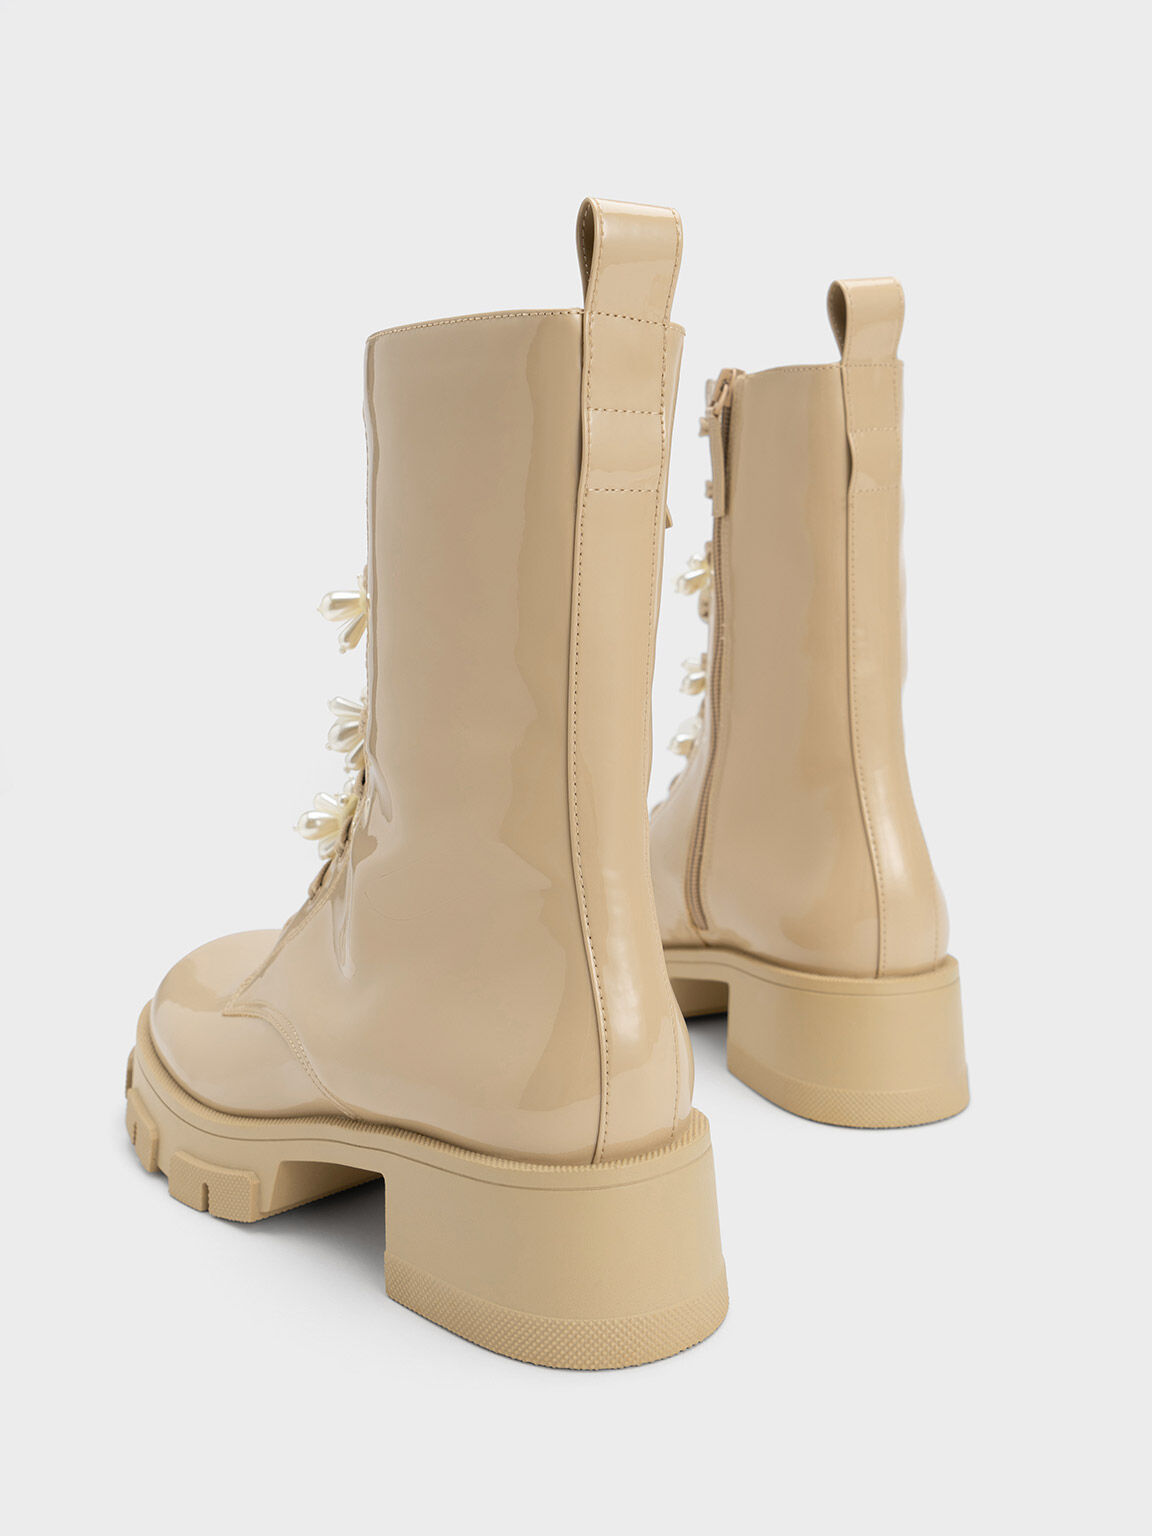 Hayden Bead-Embellished Patent Boots, Nude, hi-res